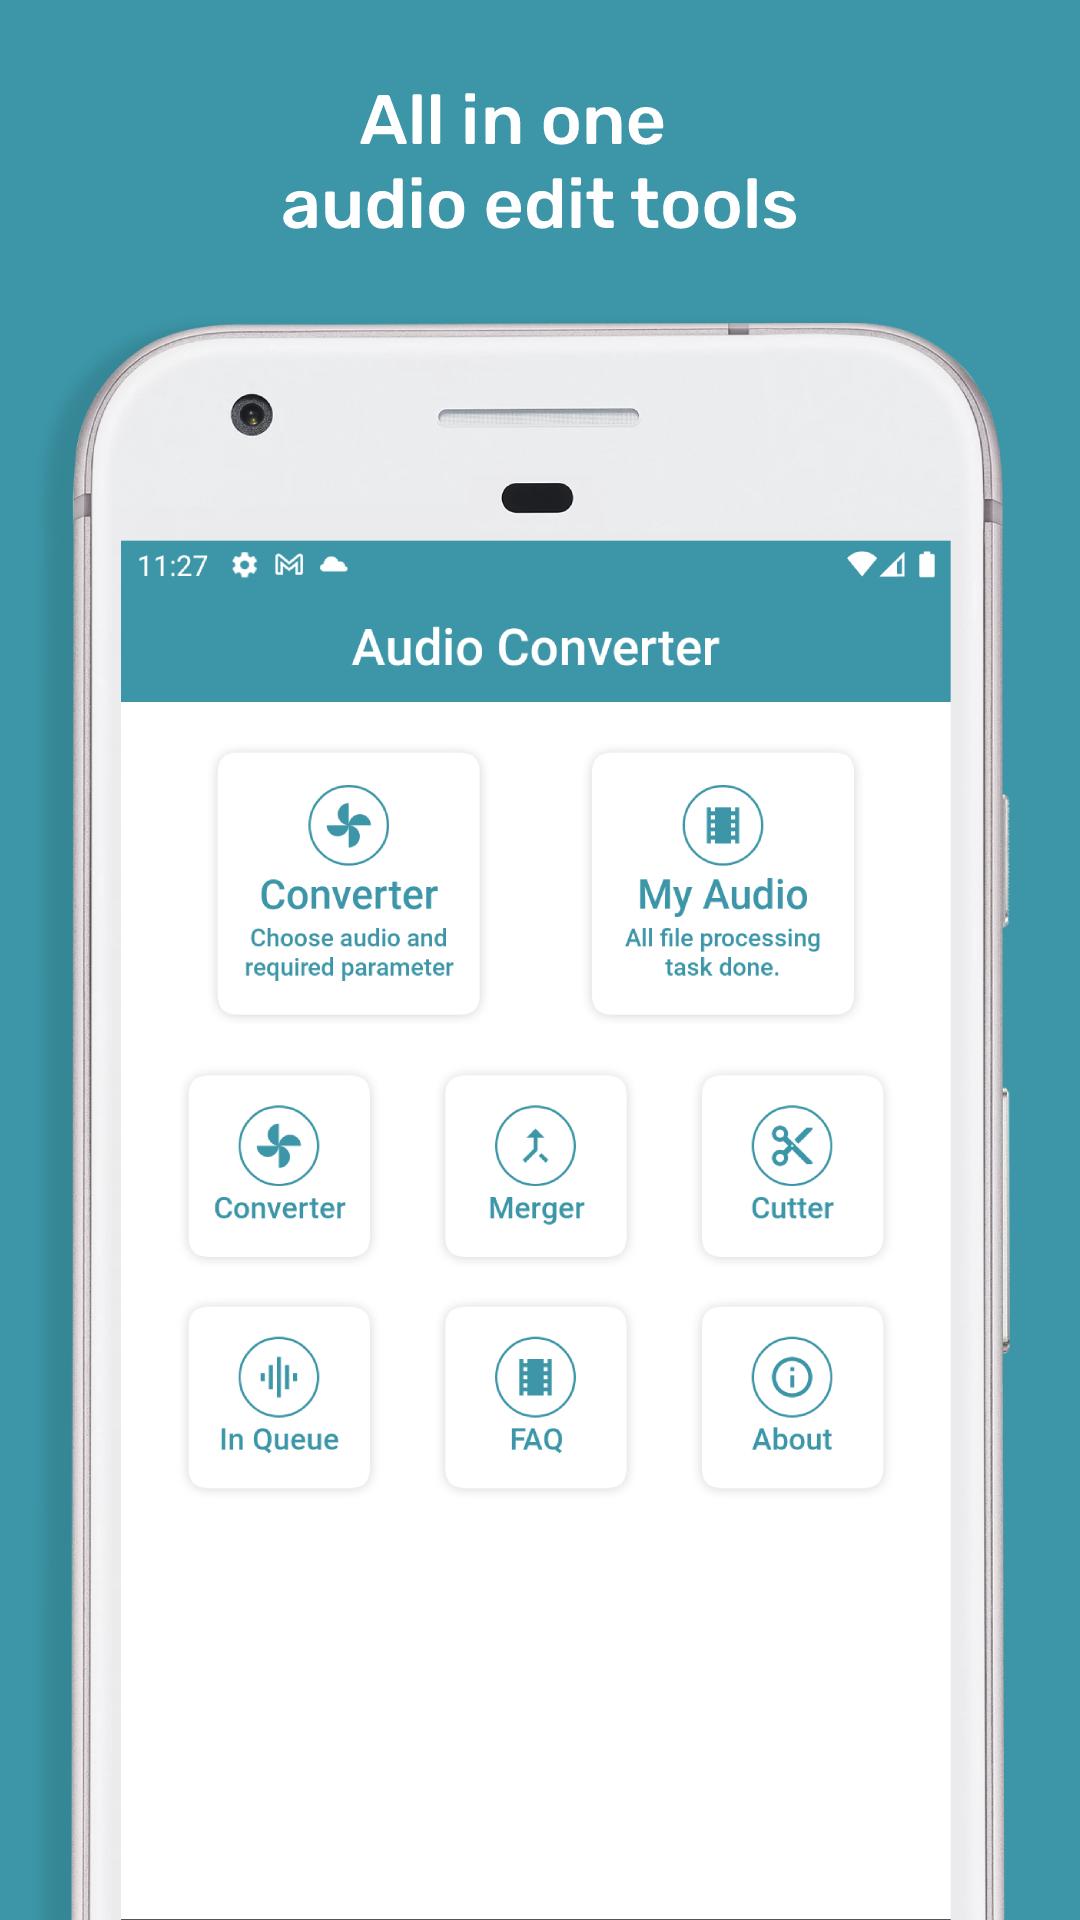 Download do APK de All Audio Converter - MP3, M4A para Android